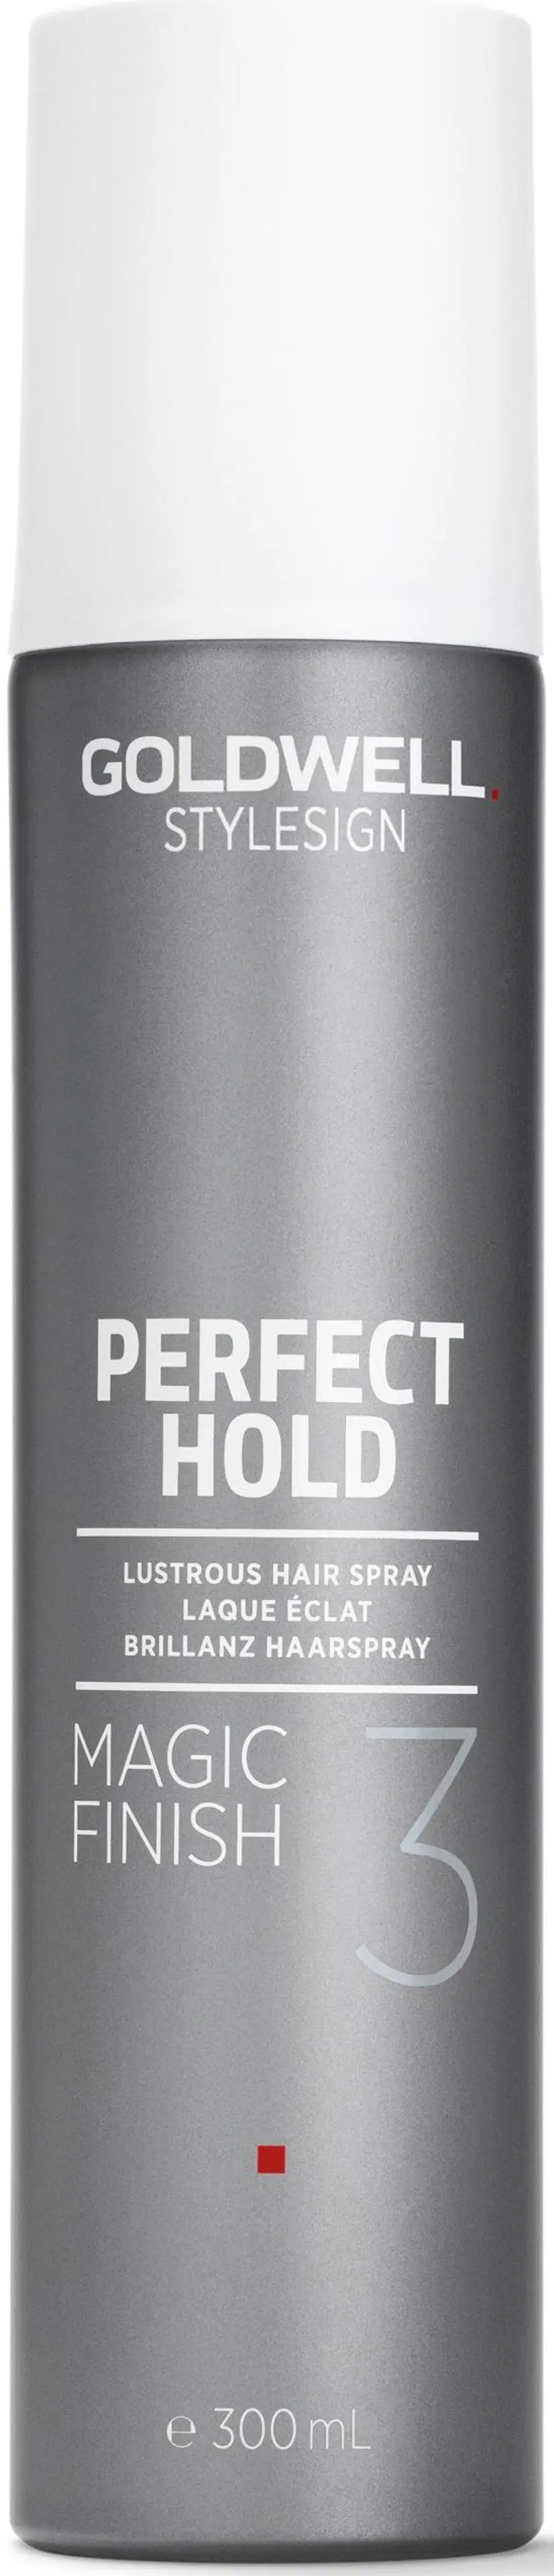 Goldwell StyleSign Perfect Hold Magic Finish 3 Hair spray hiuskiinne 300 ml